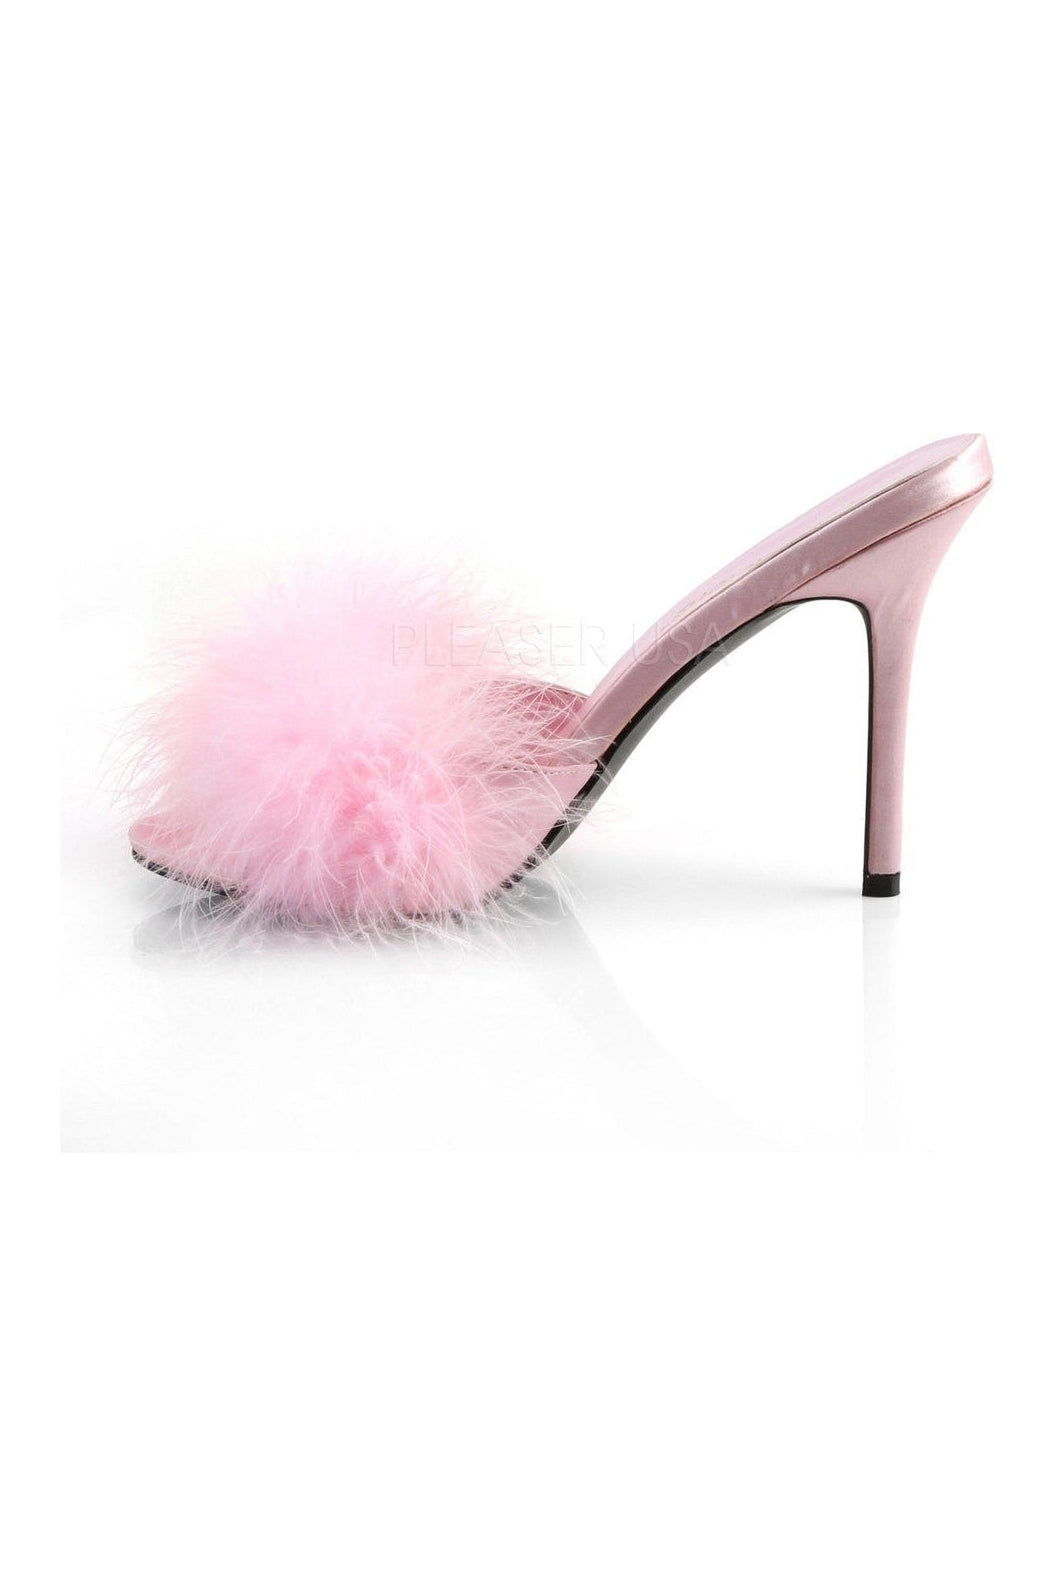 CLASSIQUE-01F Slide | Pink Faux Leather-Fabulicious-Marabous-SEXYSHOES.COM